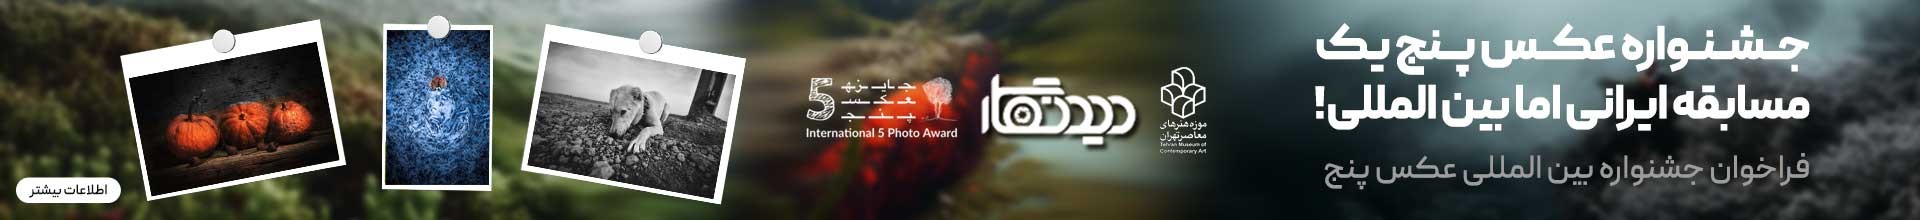 جشنواره بین المللی عکس جایزه عکس 5